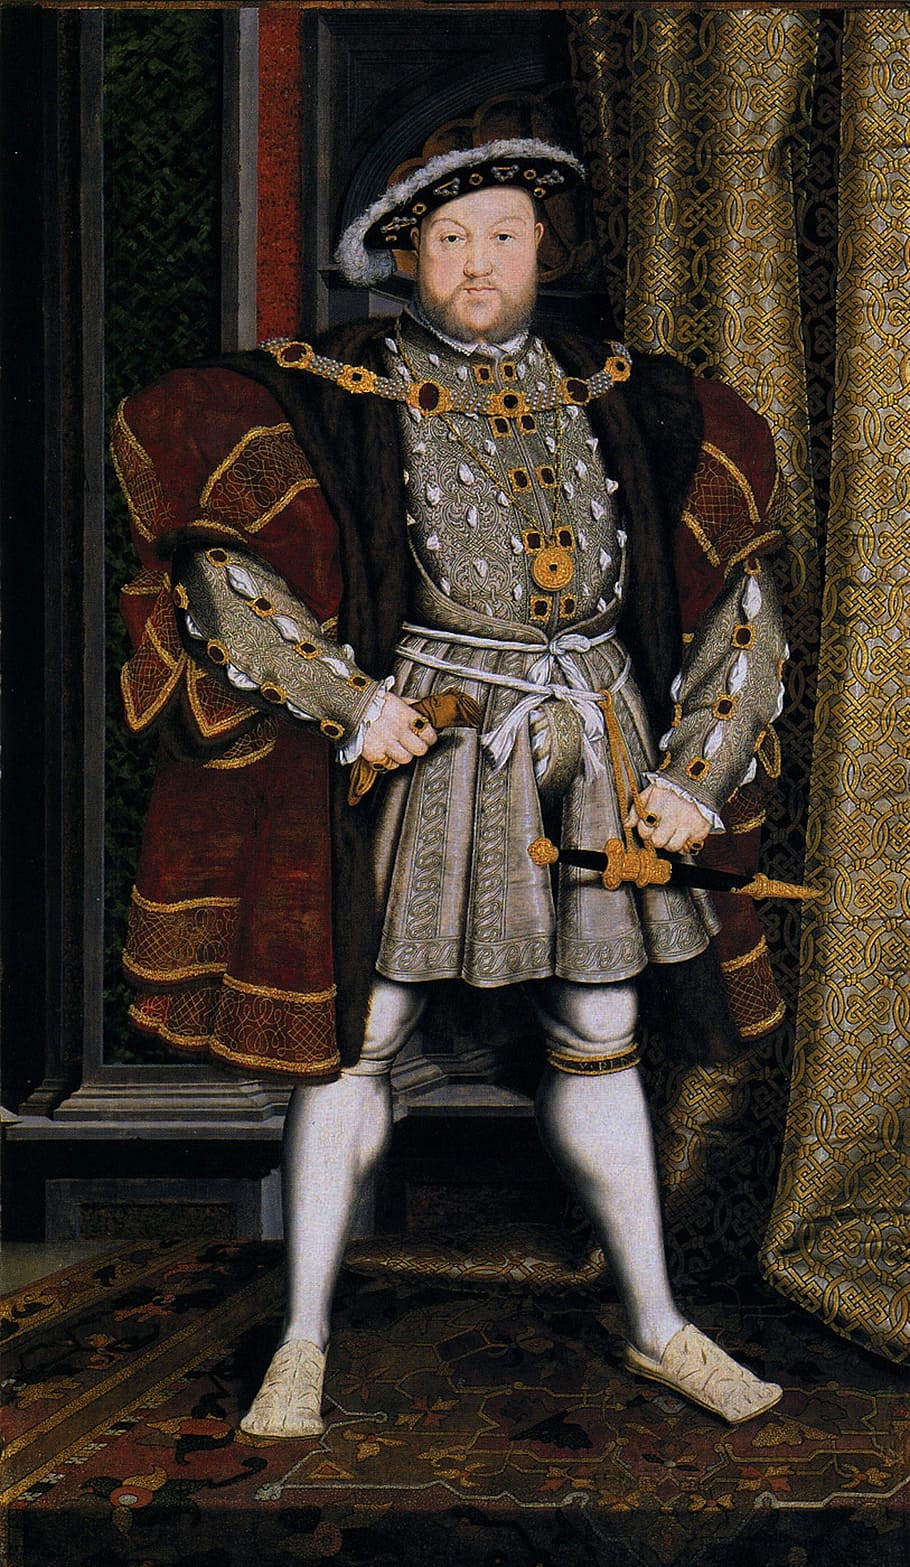 medieval king portrait